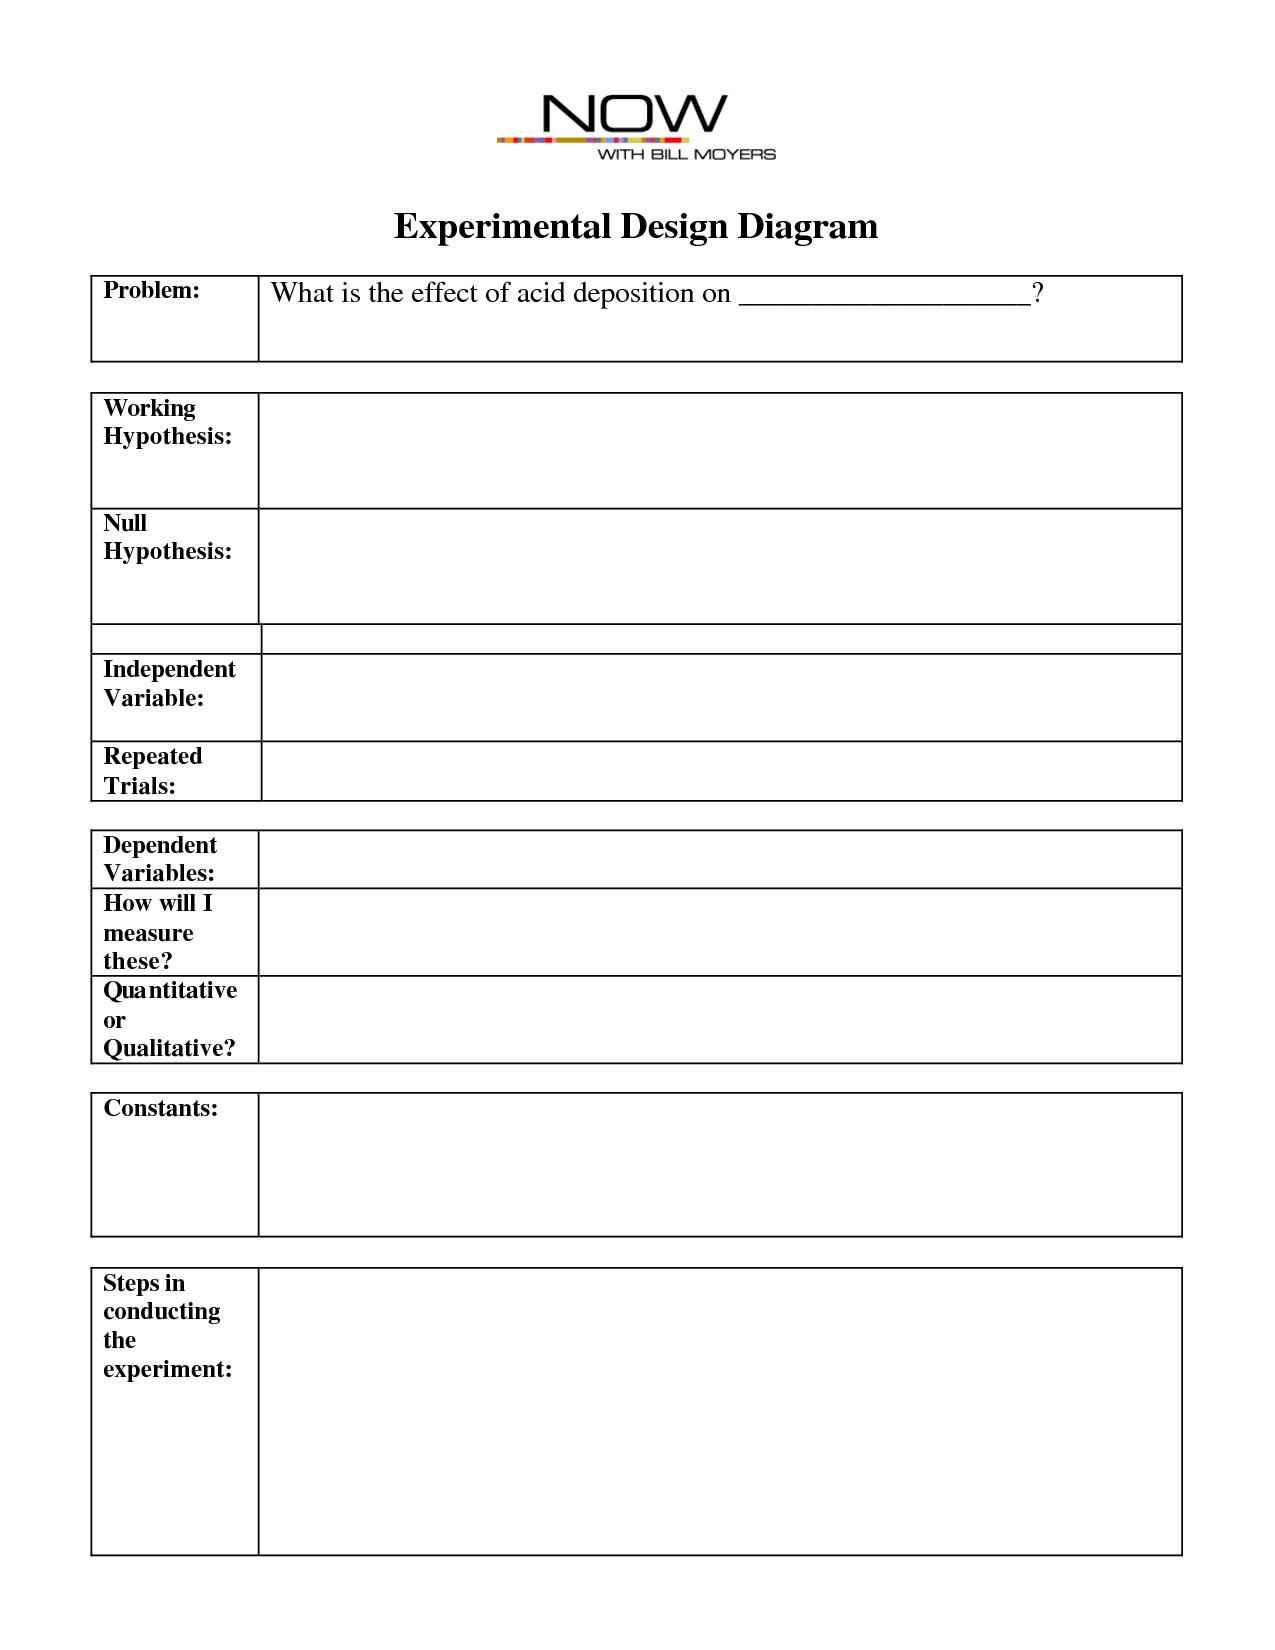 Experimental Design Worksheet Answers